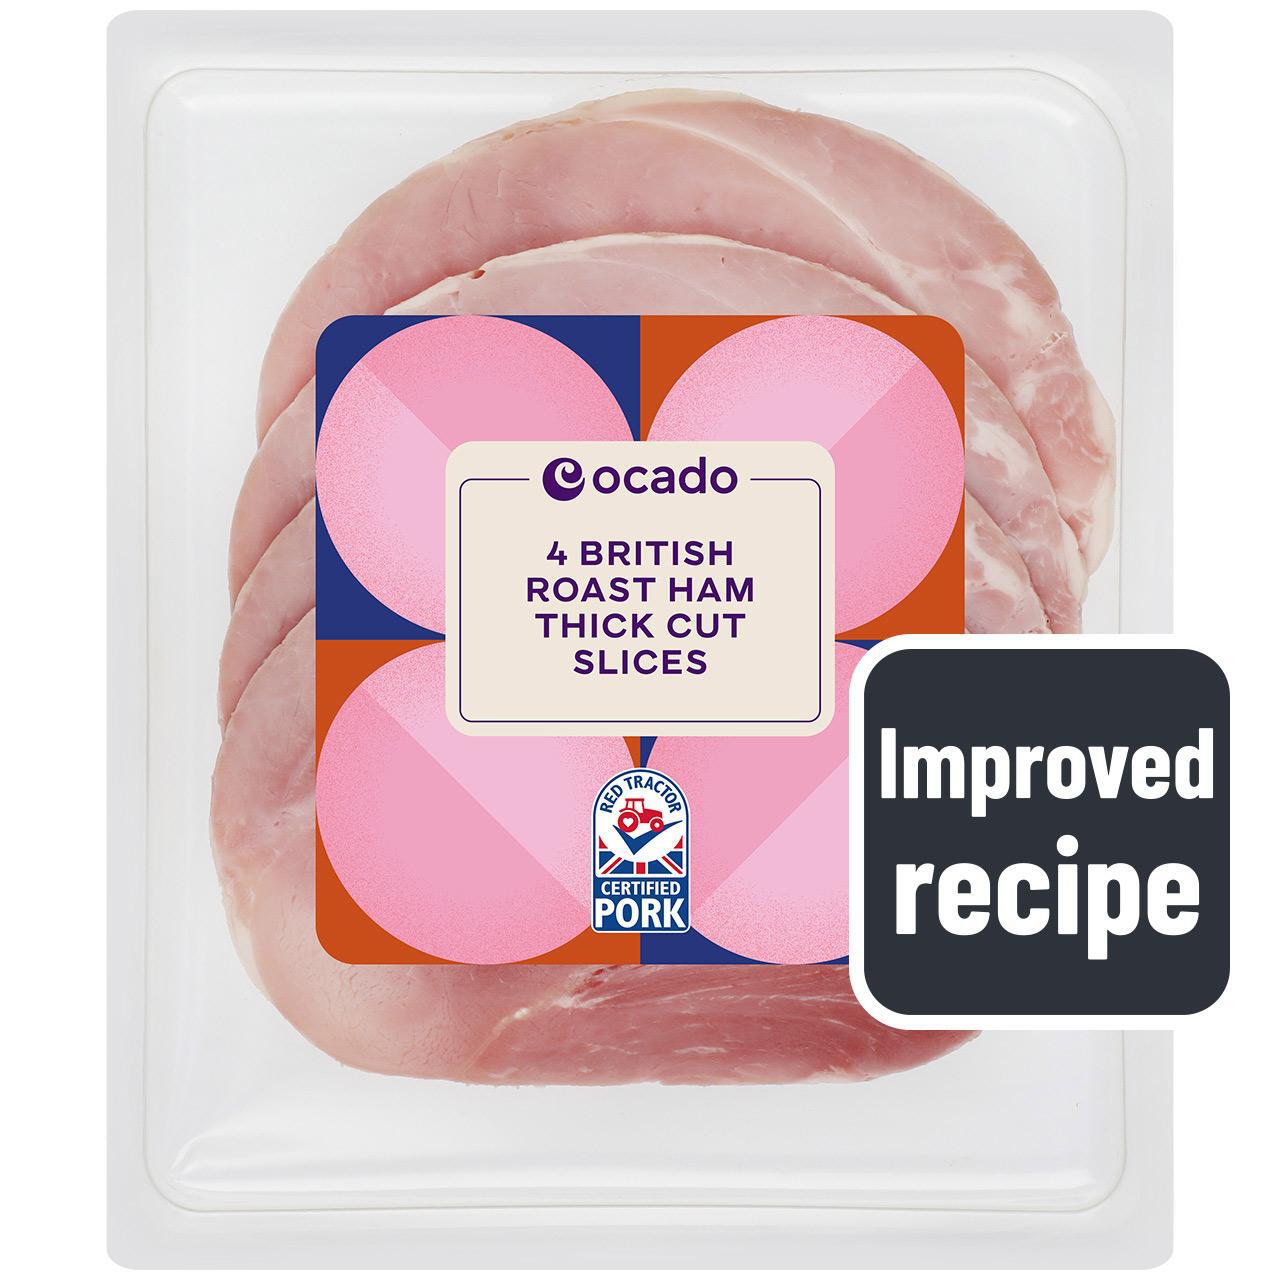 Ocado British Roast Ham Thick Cut 4 Slices No Added Water 180g